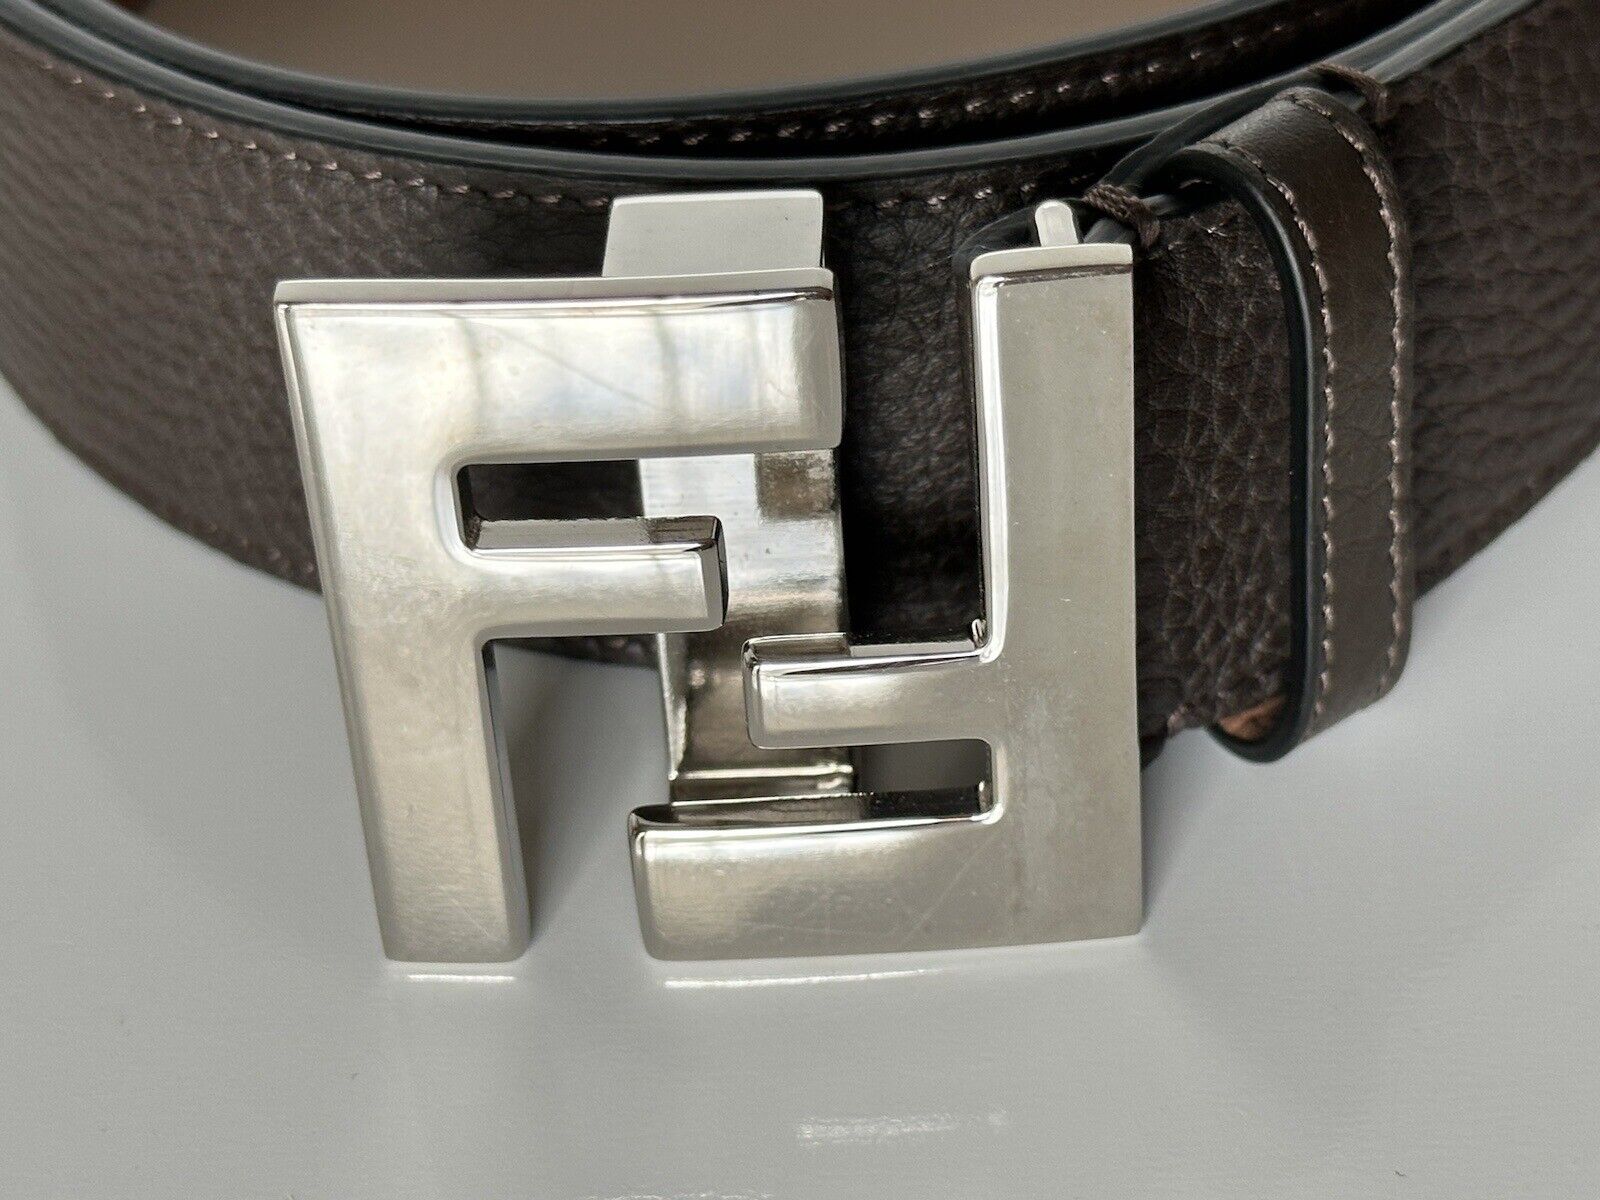 NWT $550 Fendi FF Calf Leather Brown Belt 100/40 Italy 7C0403